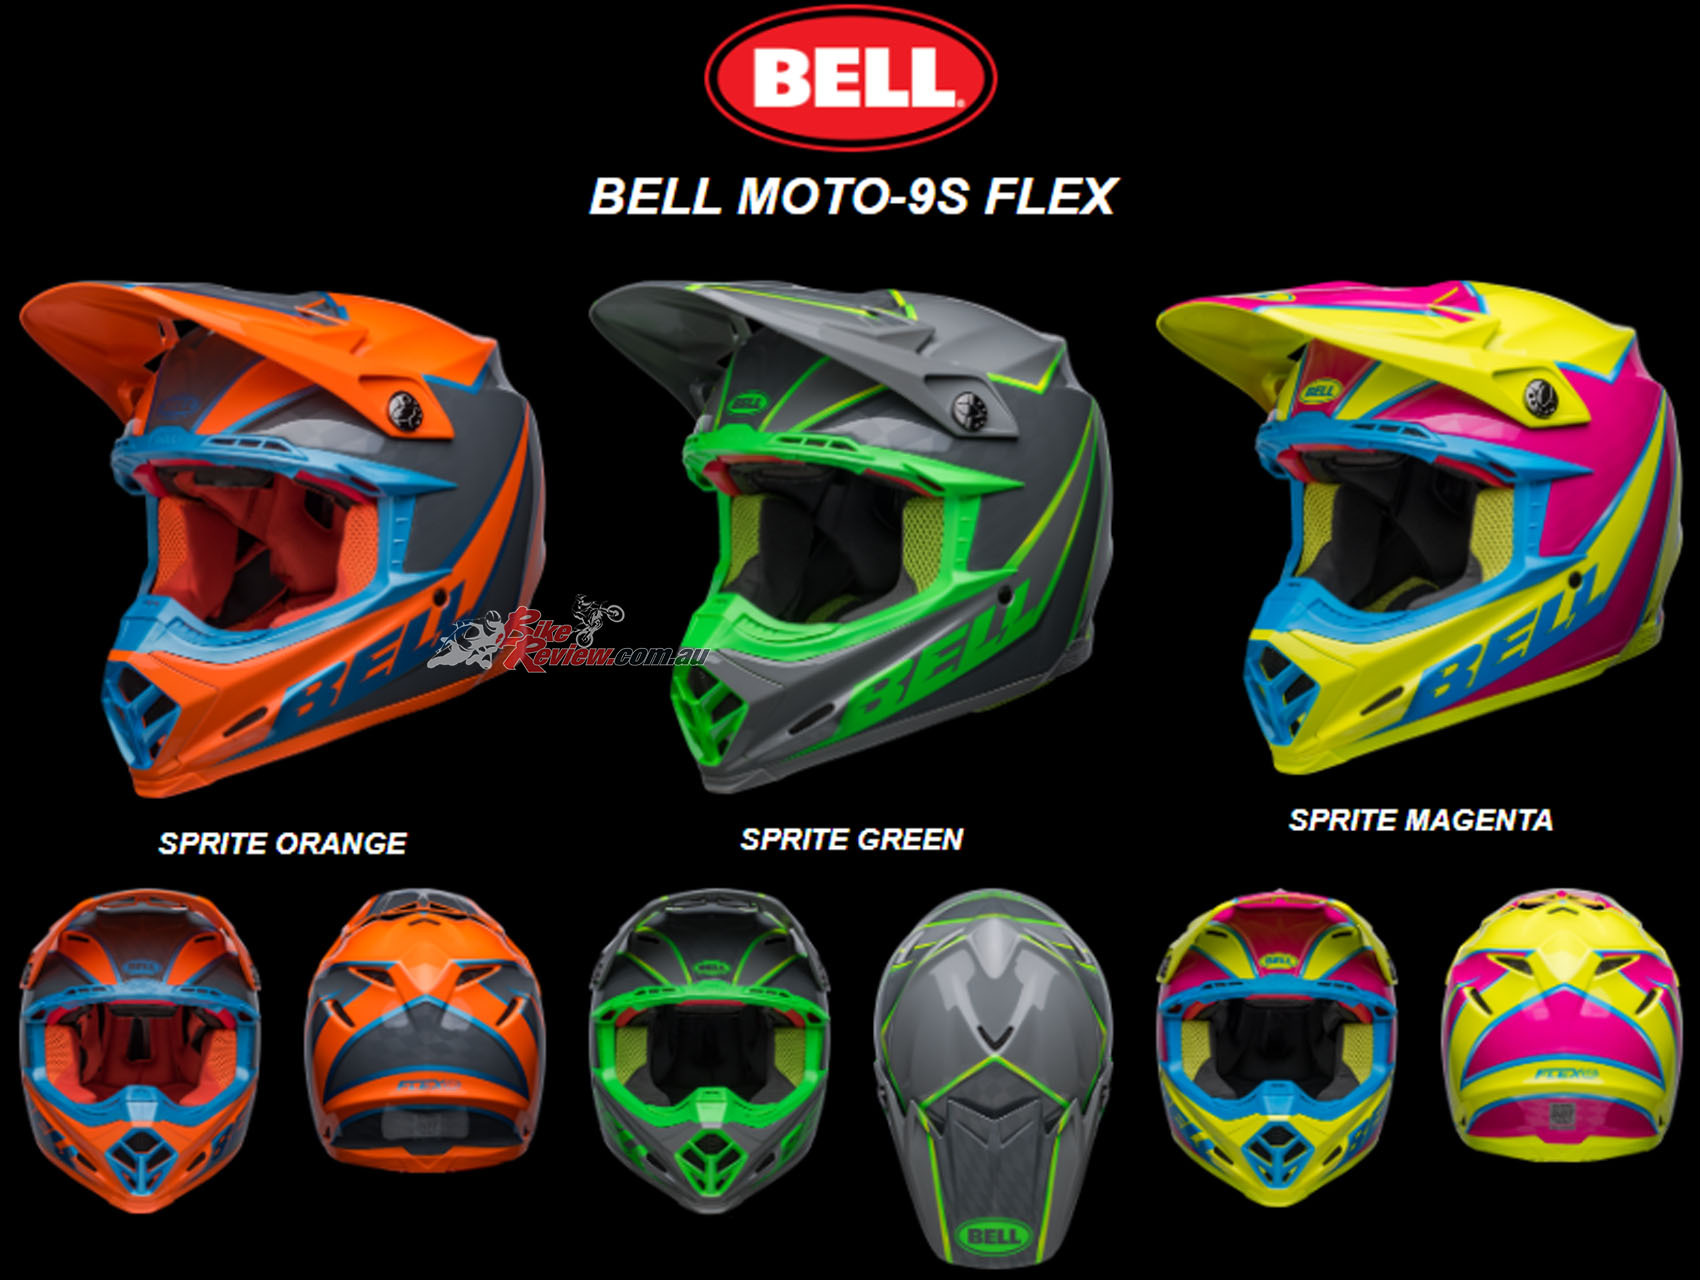 In-Stock Now: New Bell Moto-9s Flex Sprite Helmets Bike Review